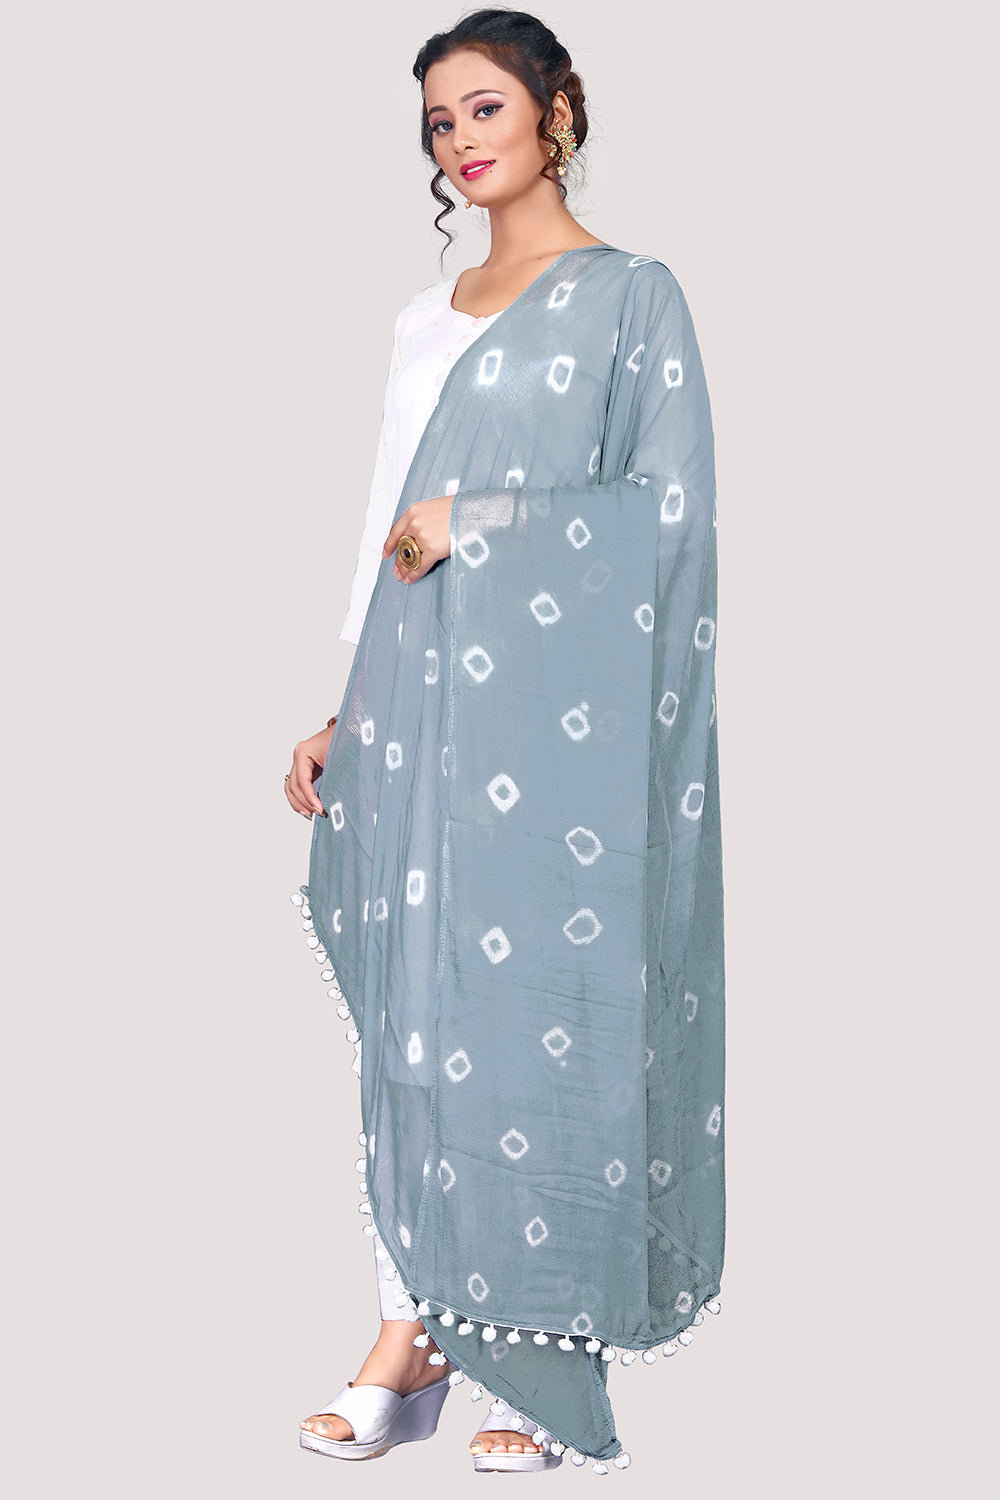 Women's Grey  Bandhani Print Woven Chiffon Dupatta  - NIMIDHYA